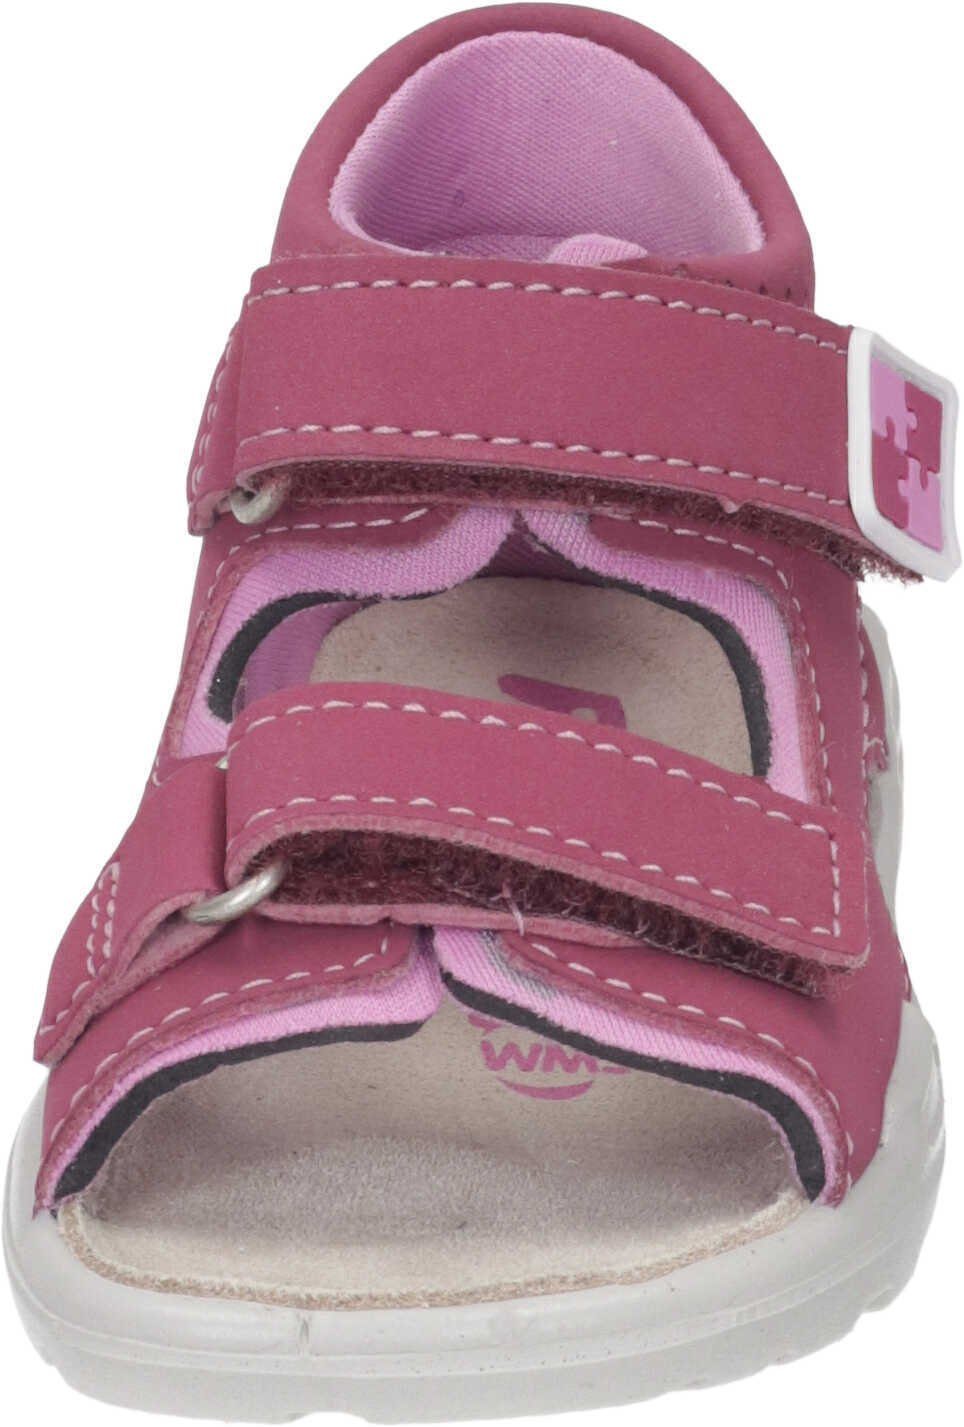 Pepino Sandaletten Outdoorsandale Ricosta pink aus Textil